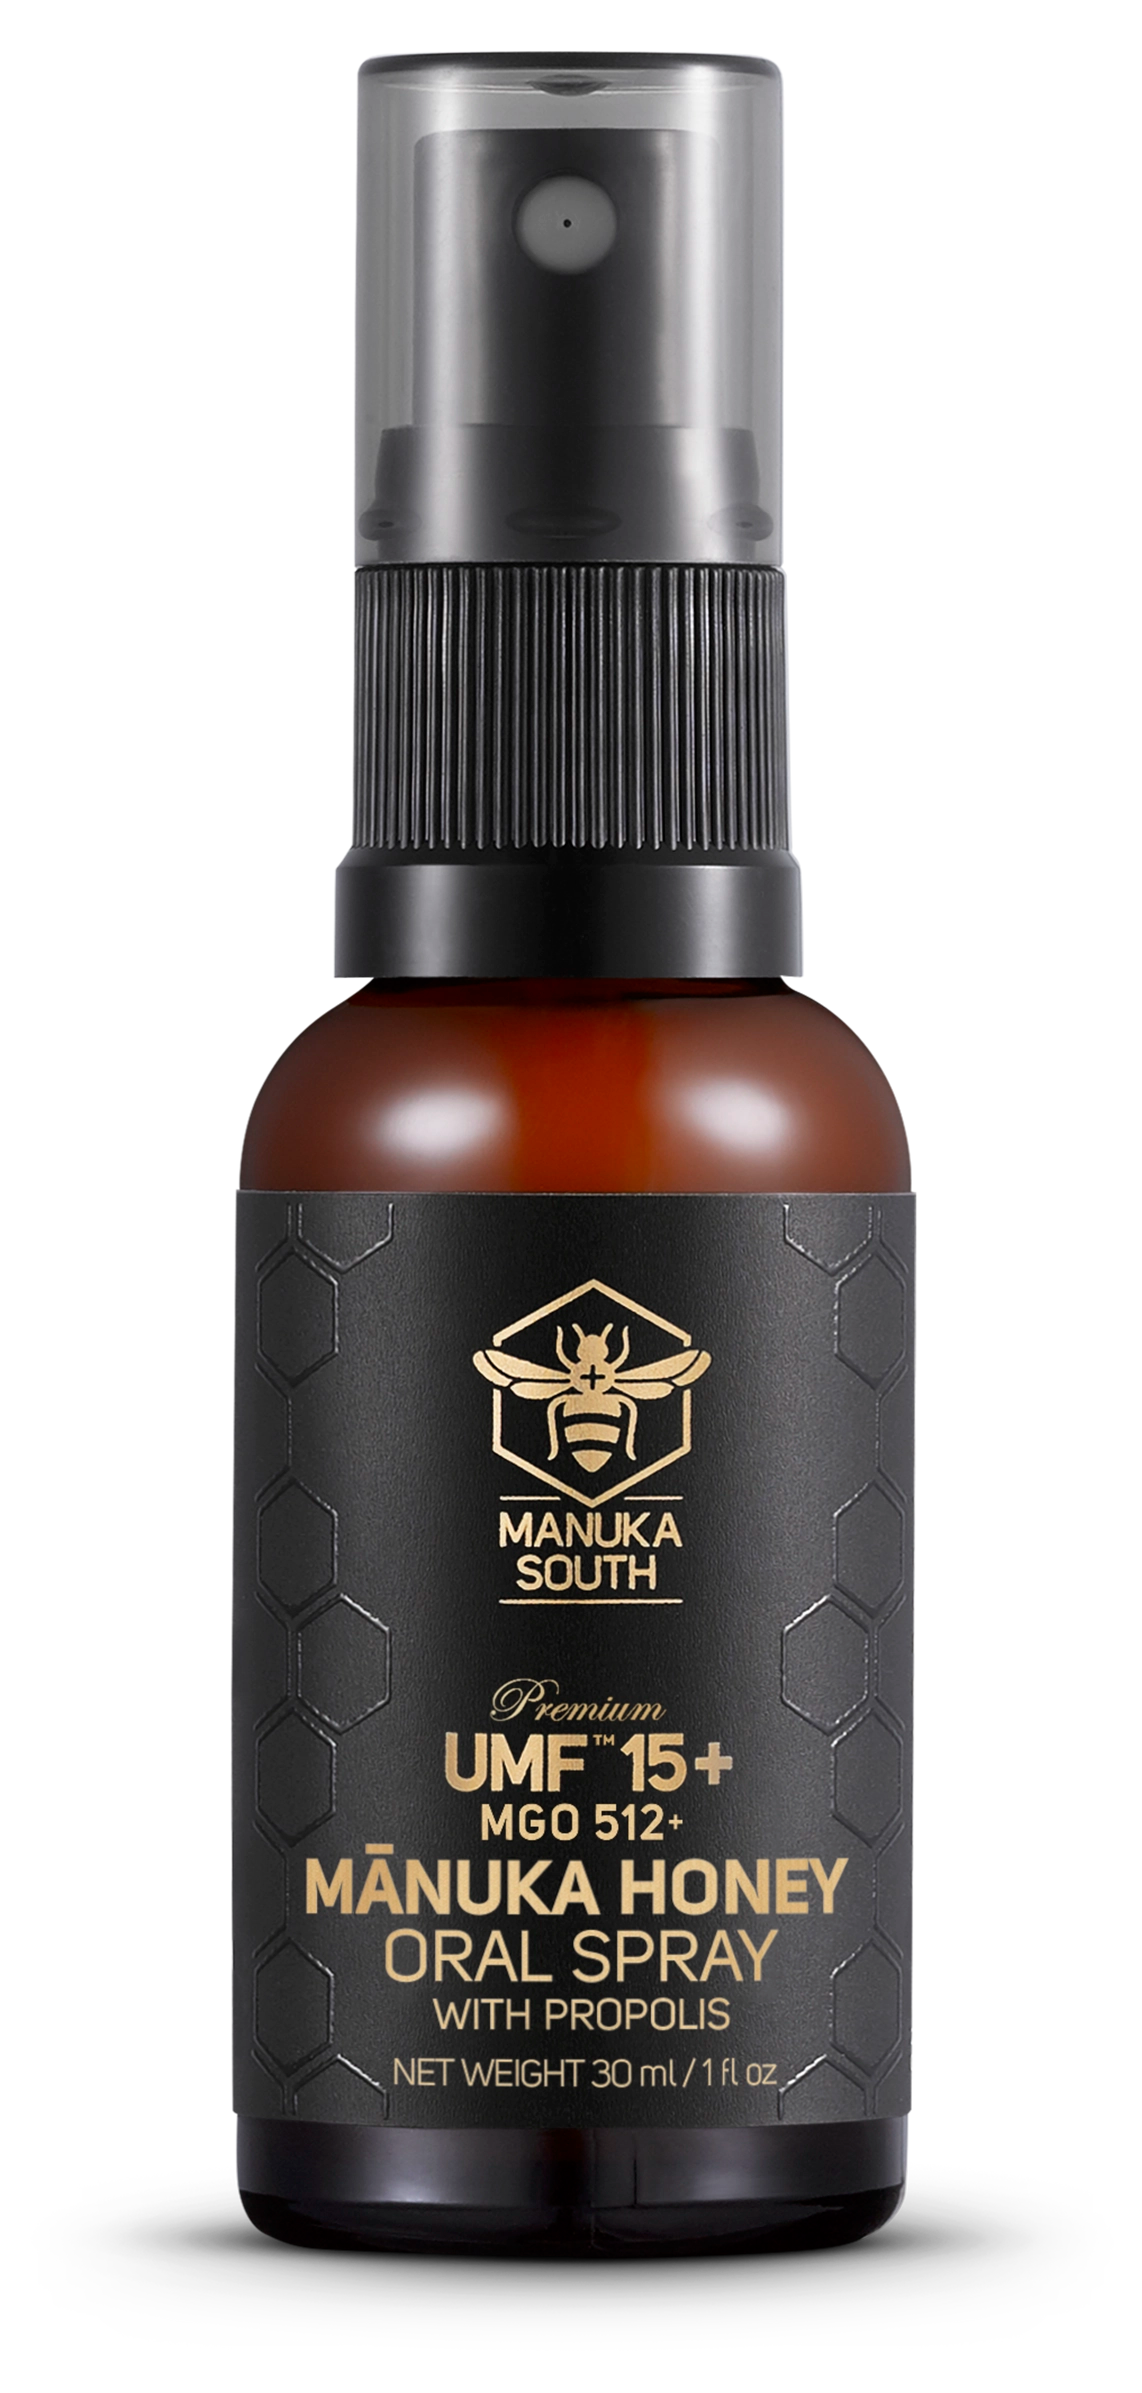 Manuka South UMF 15+ Mānuka Honey Oral Spray with Propolis